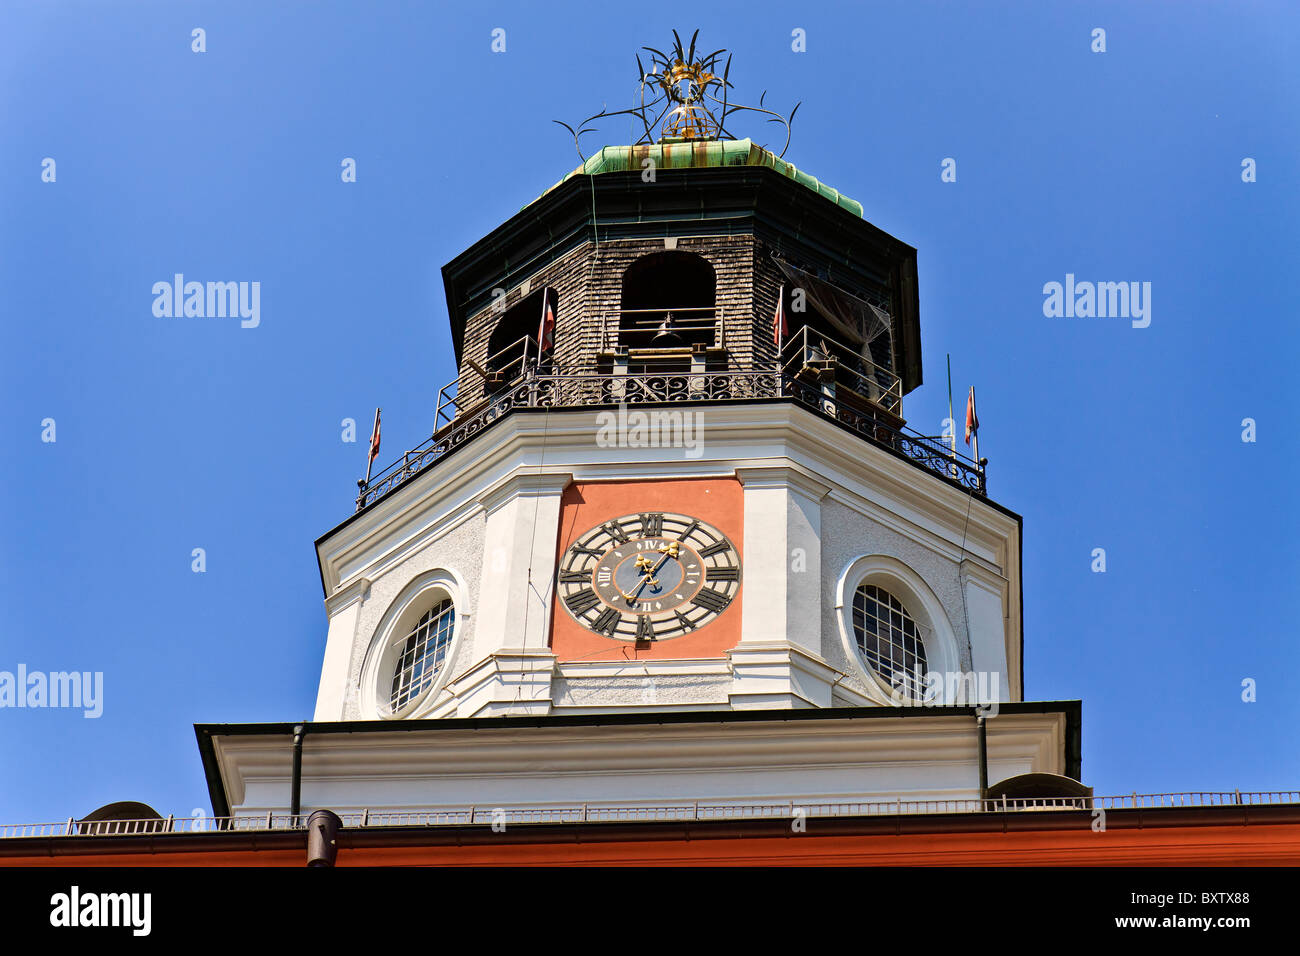 Austria Saltzberg Glockenspiel reloj Foto de stock